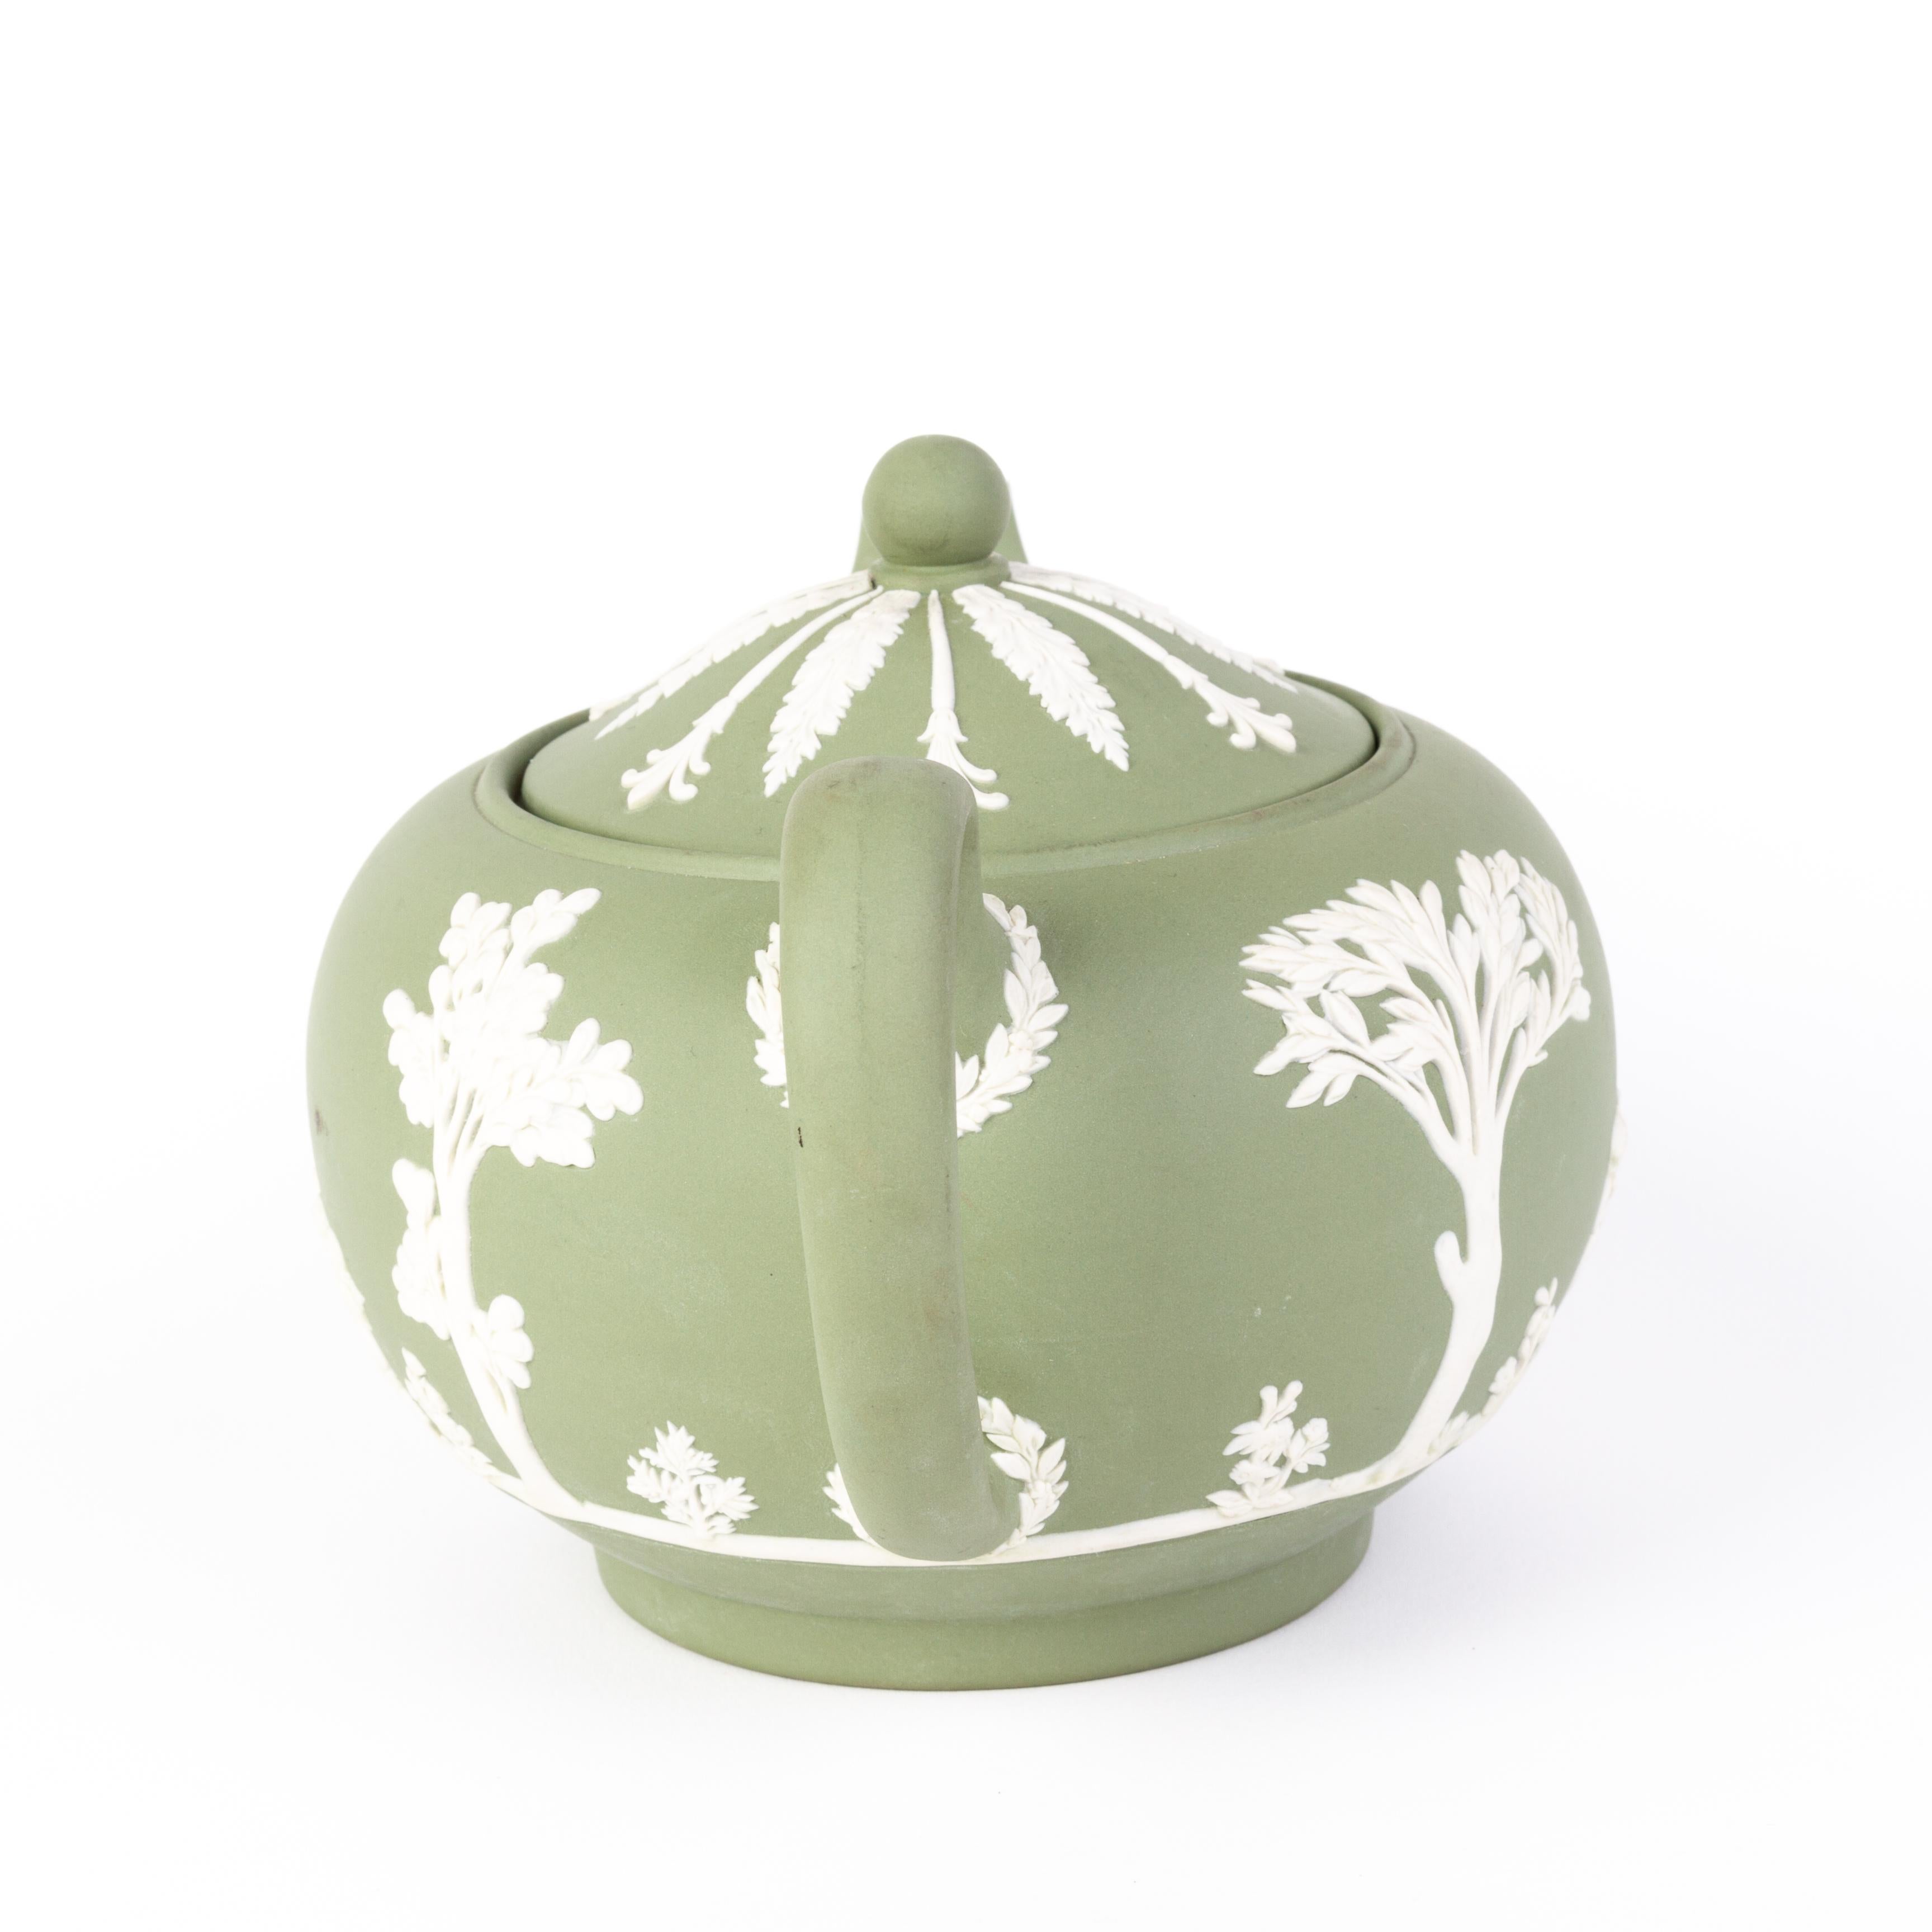 Wedgwood Green Jasperware Neoclassical Cameo Lidded Teapot
Good condition
Free international shipping.